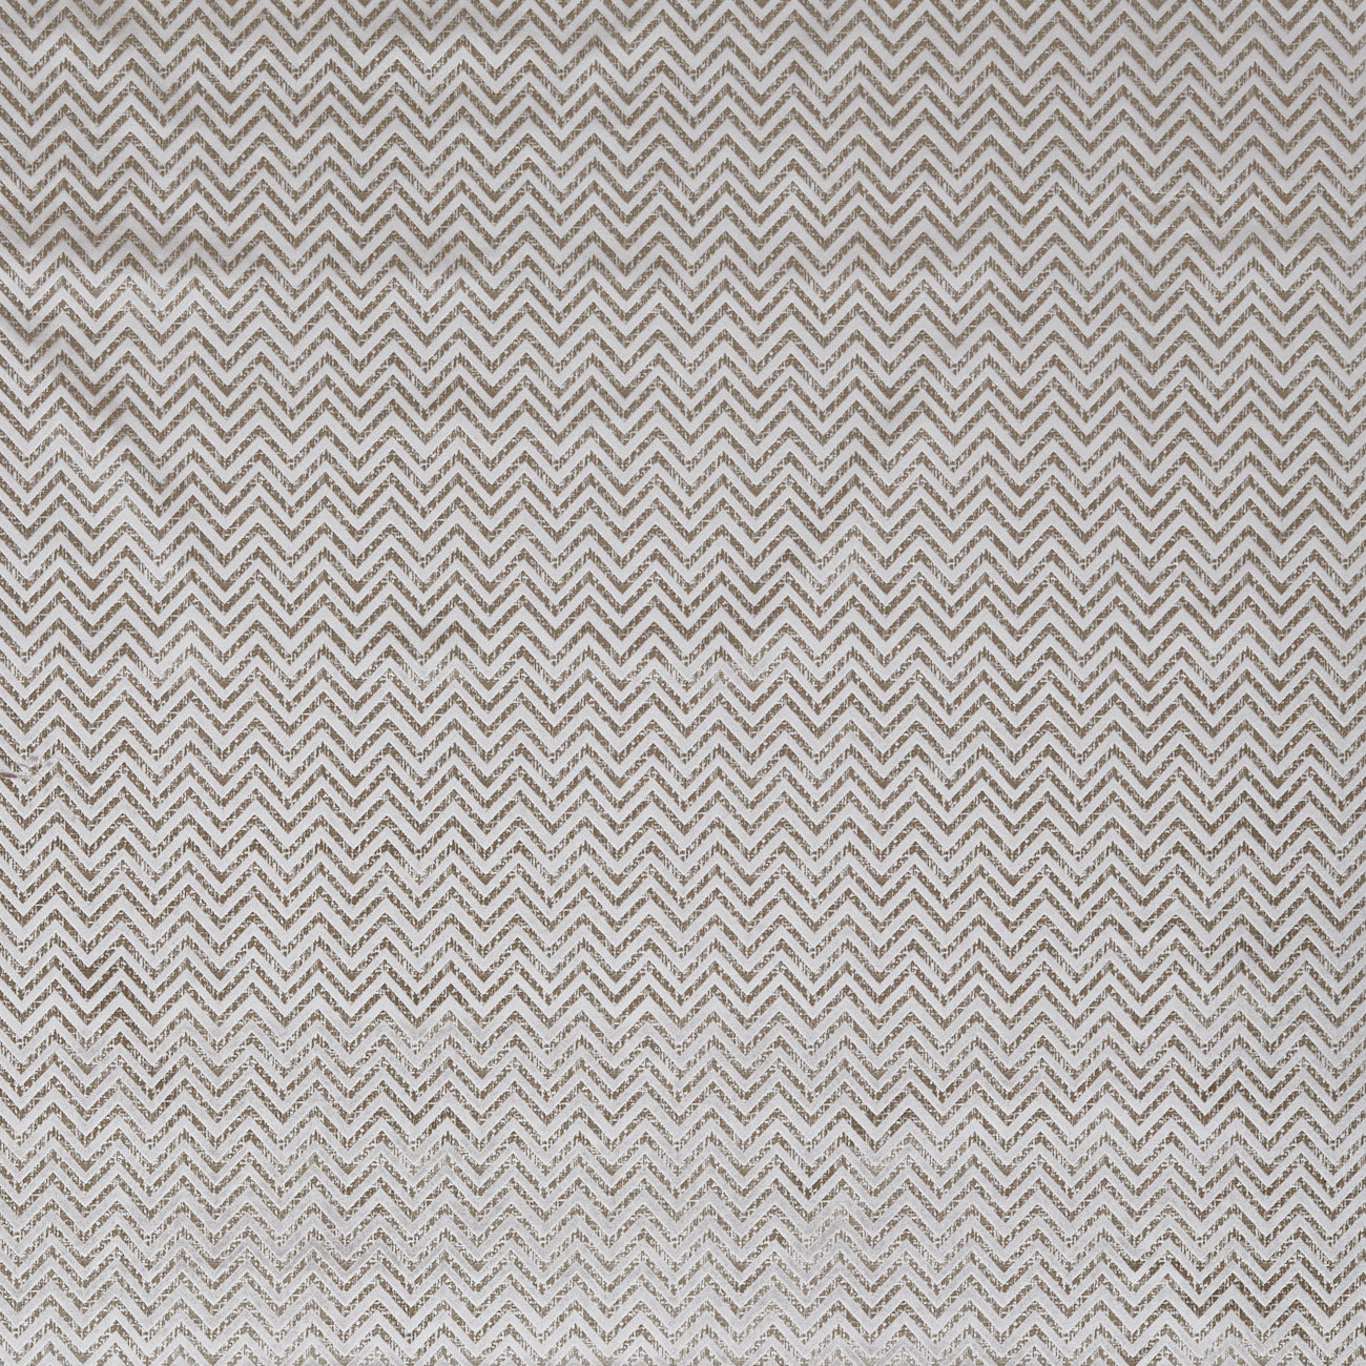 Nexus Taupe Fabric by STG